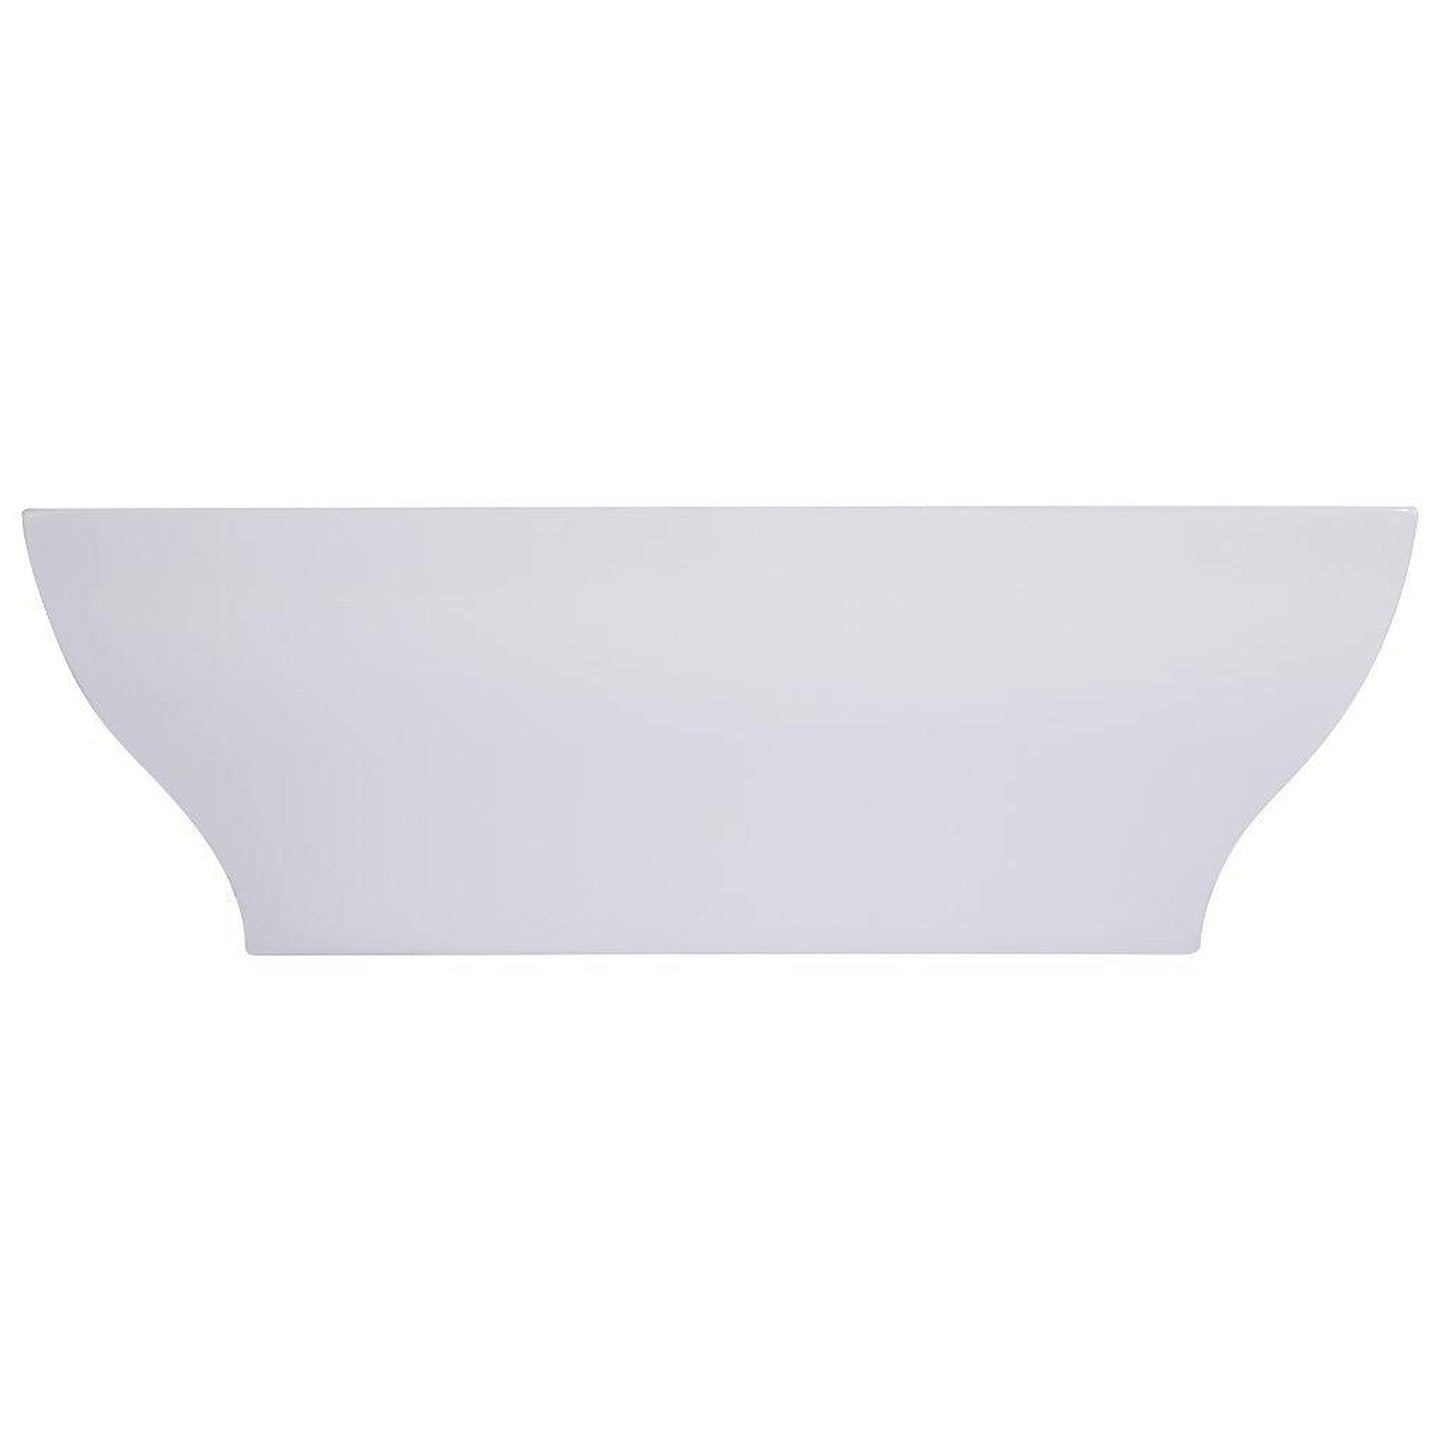 ALFI Brand AB8840 67" One Person Freestanding White Rectangle Acrylic Soaking Bathtub